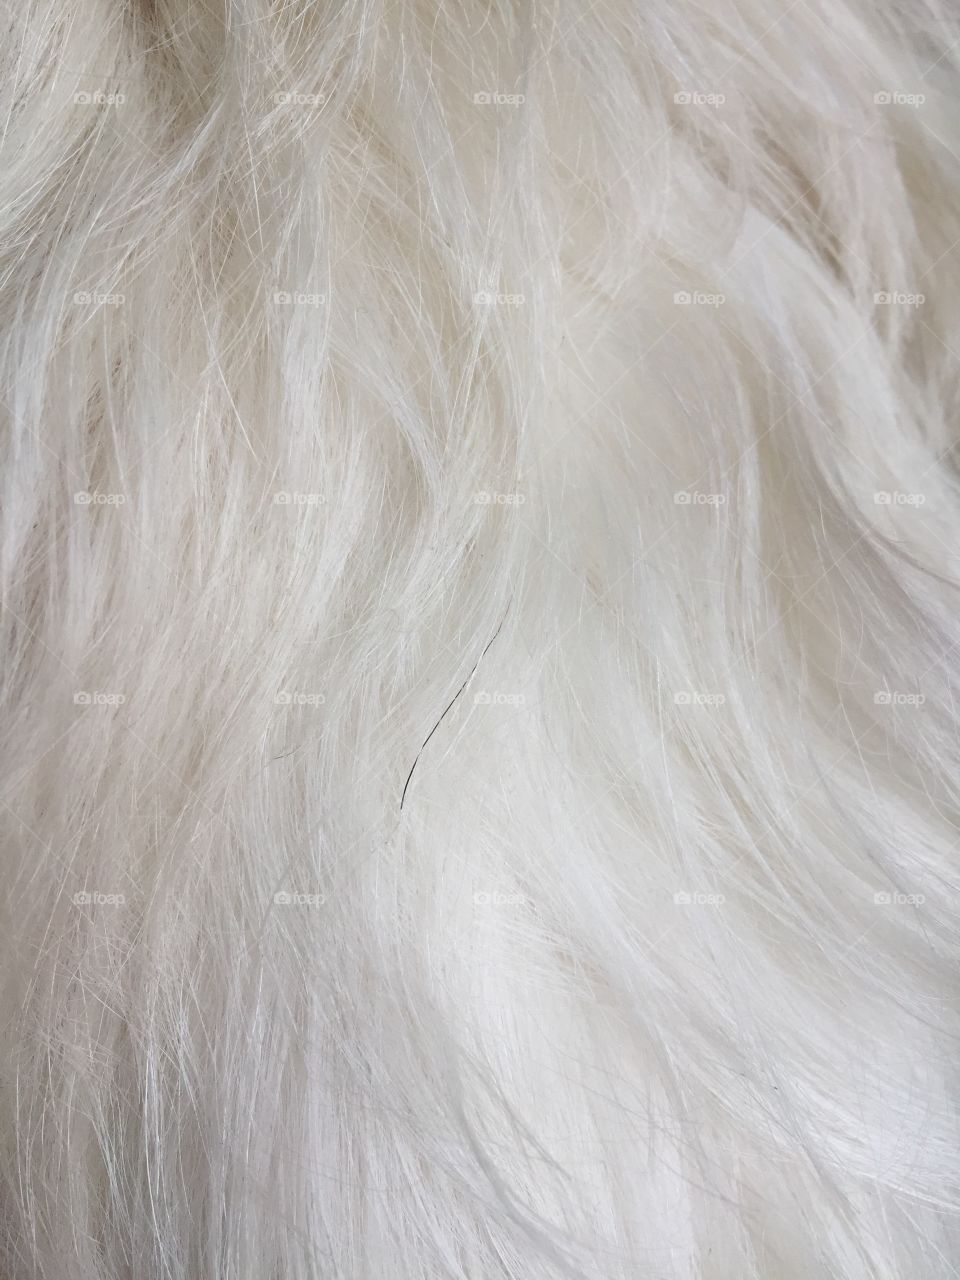 Black and white dog hair